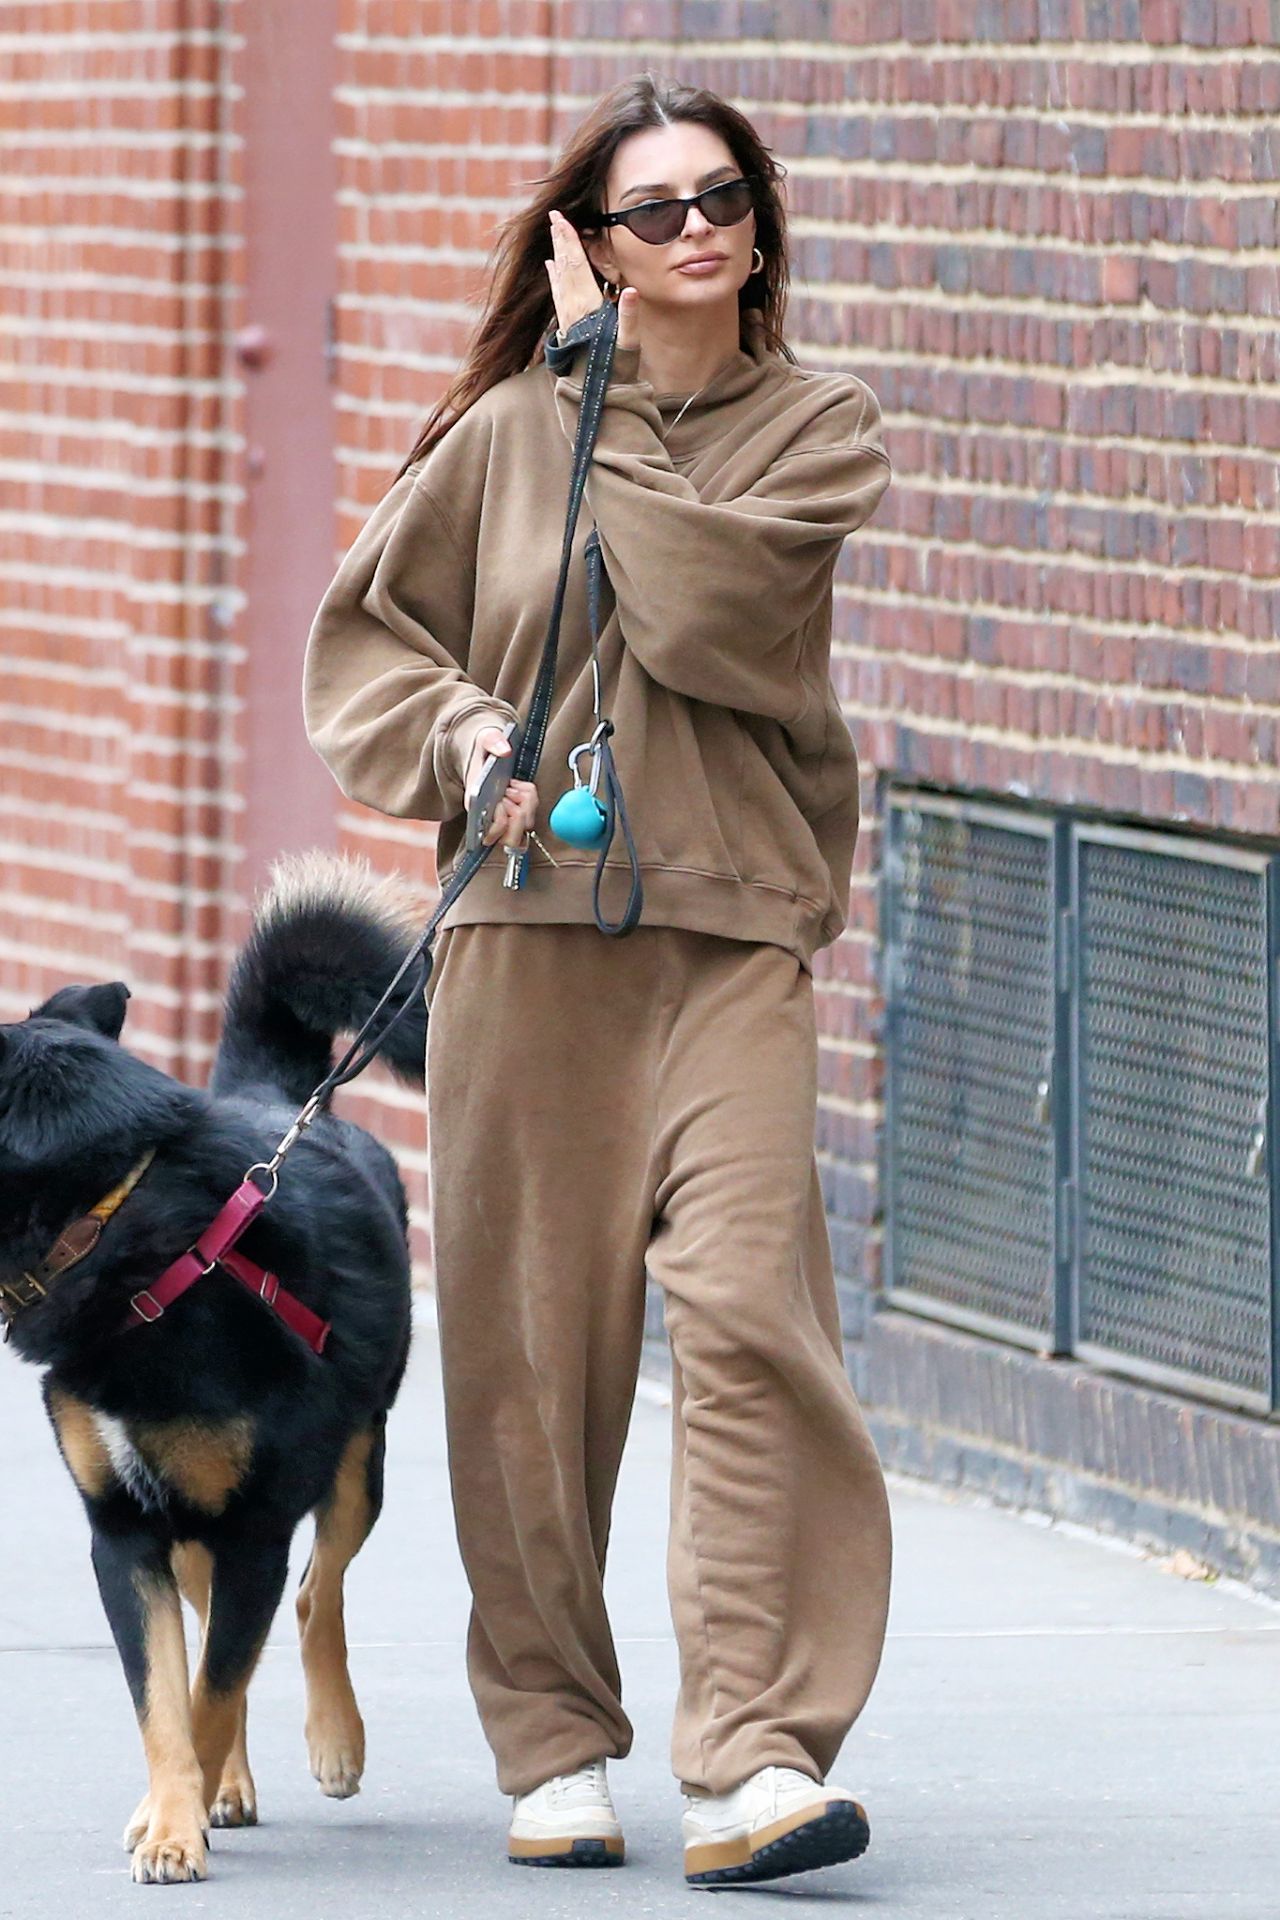 Emily Ratajkowski in chic brown sweats NYC street style 1